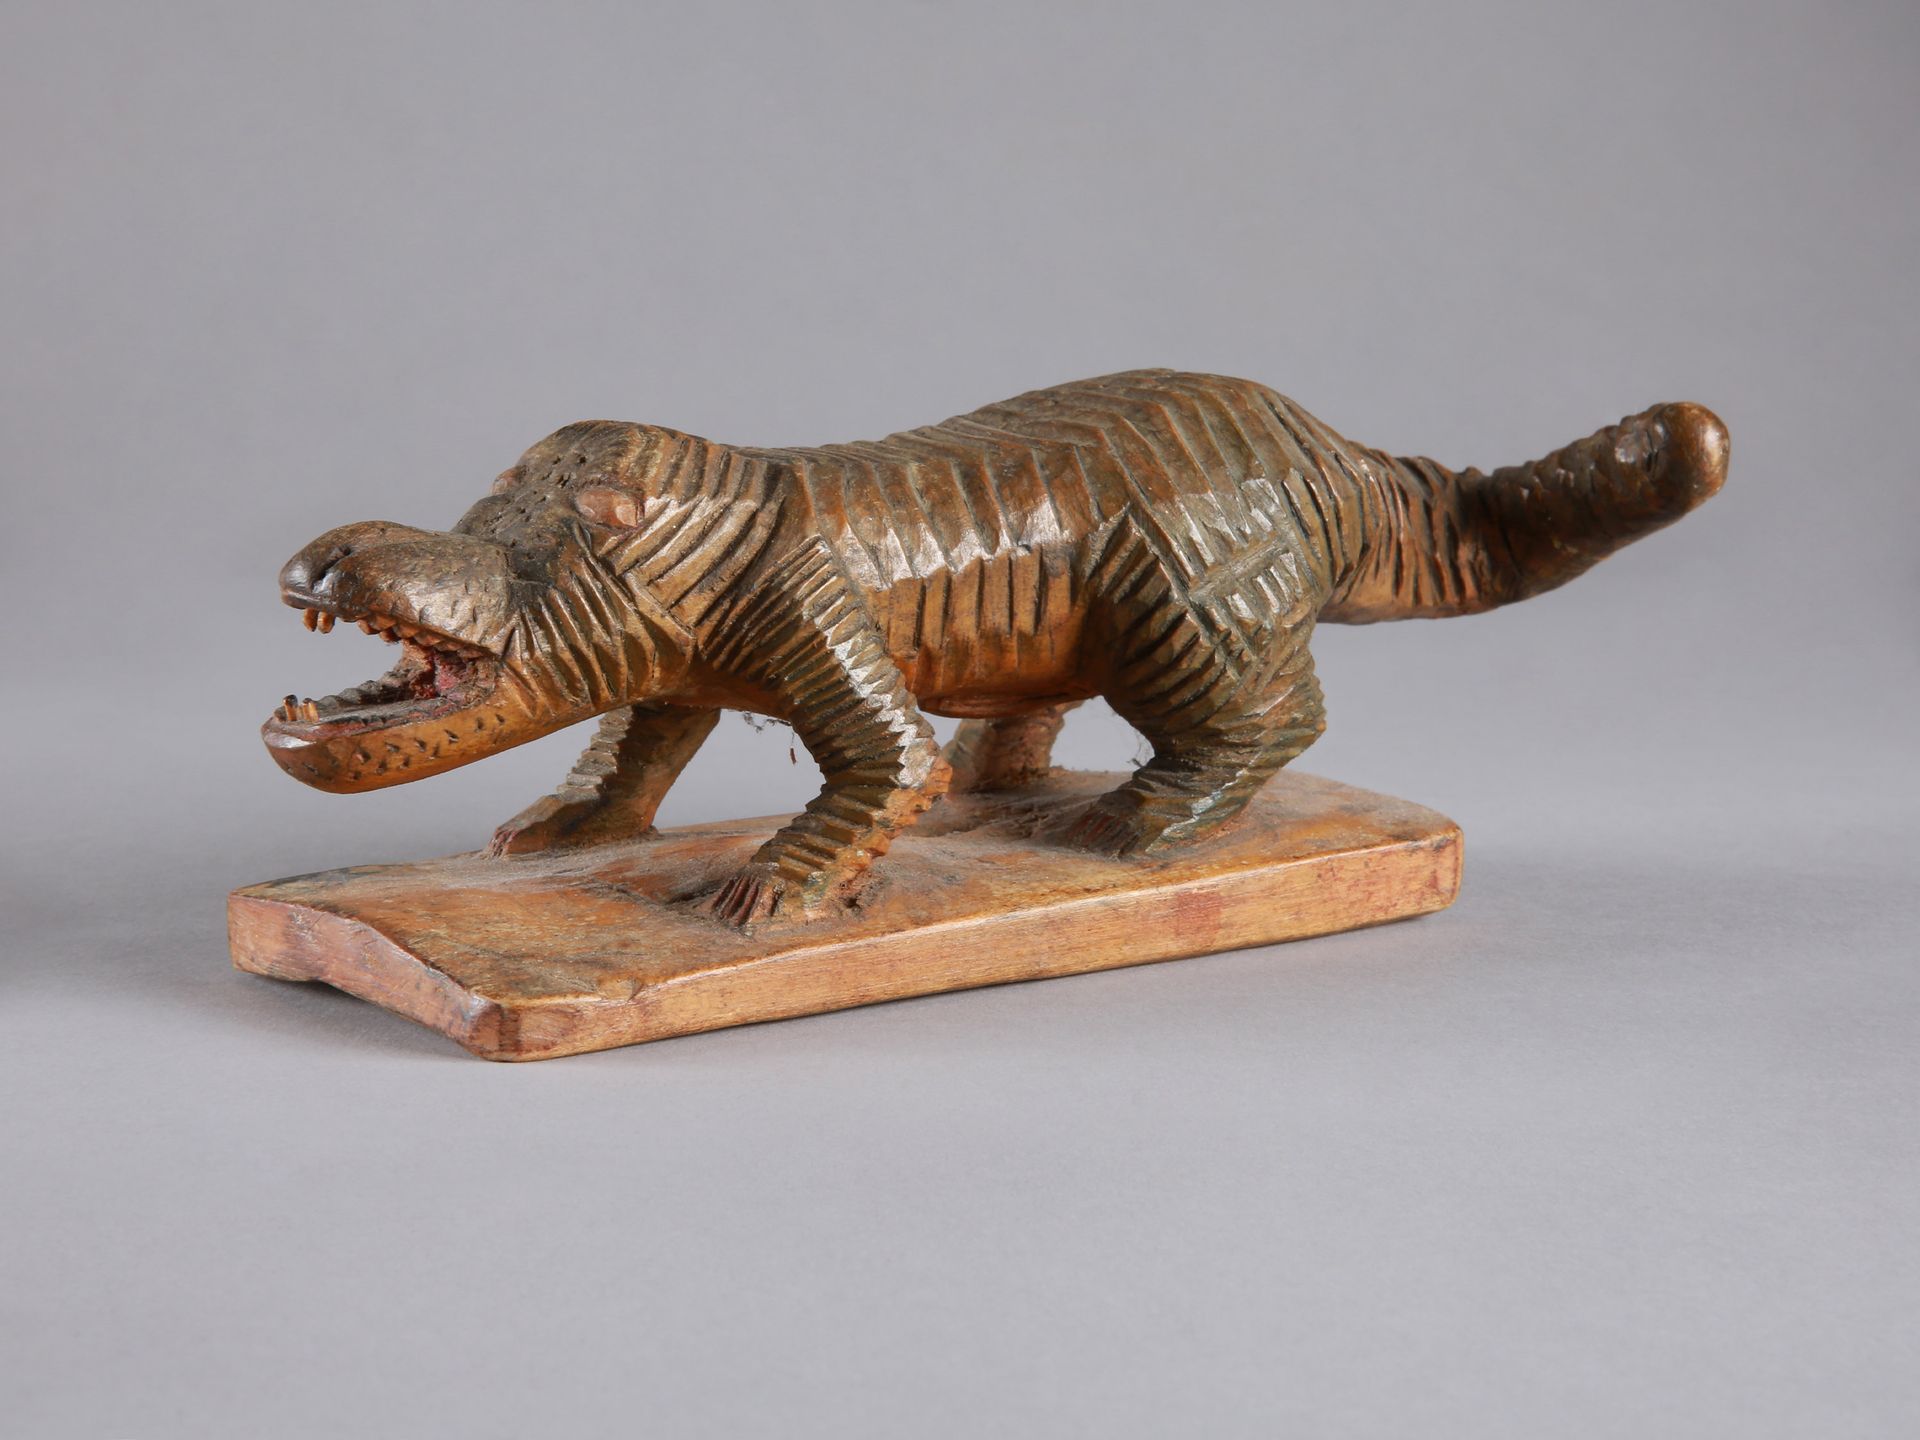 Miniature Representation of a Crocodile Représentation miniature d'un crocodile
&hellip;